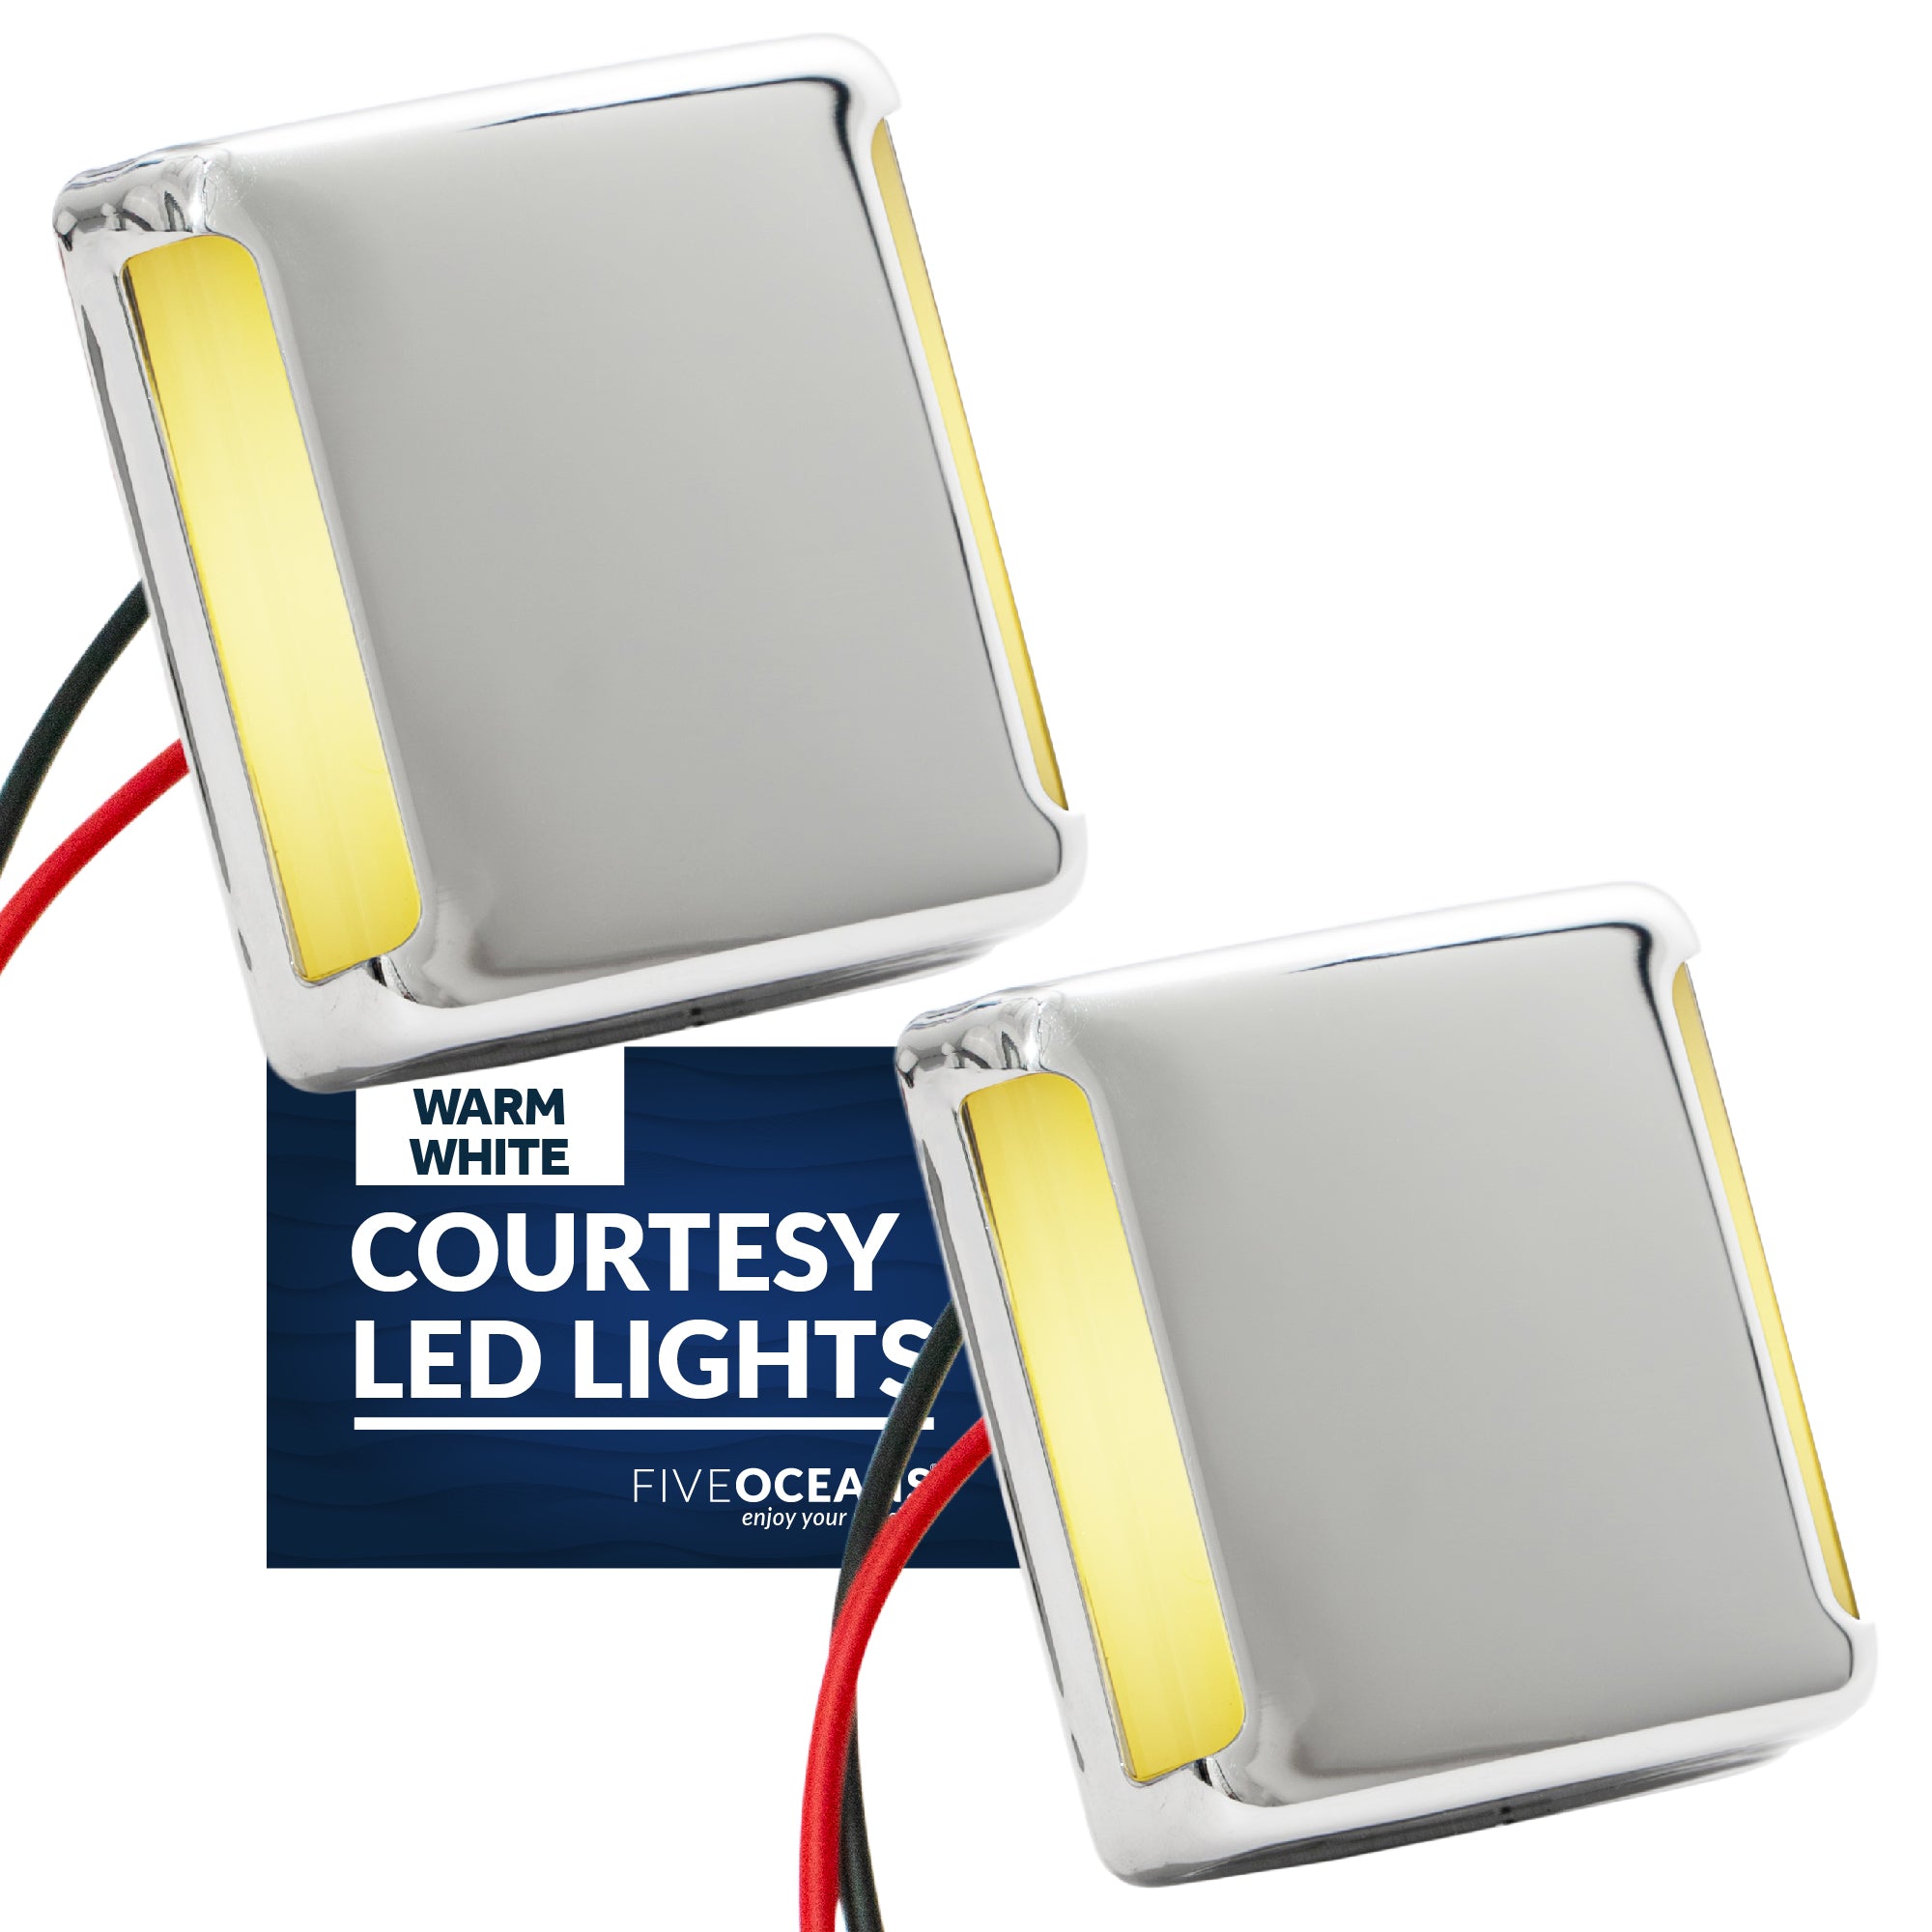 LED Courtesy Companion Way Light, Square, Warm White, 2-Pack - FO4457-M2